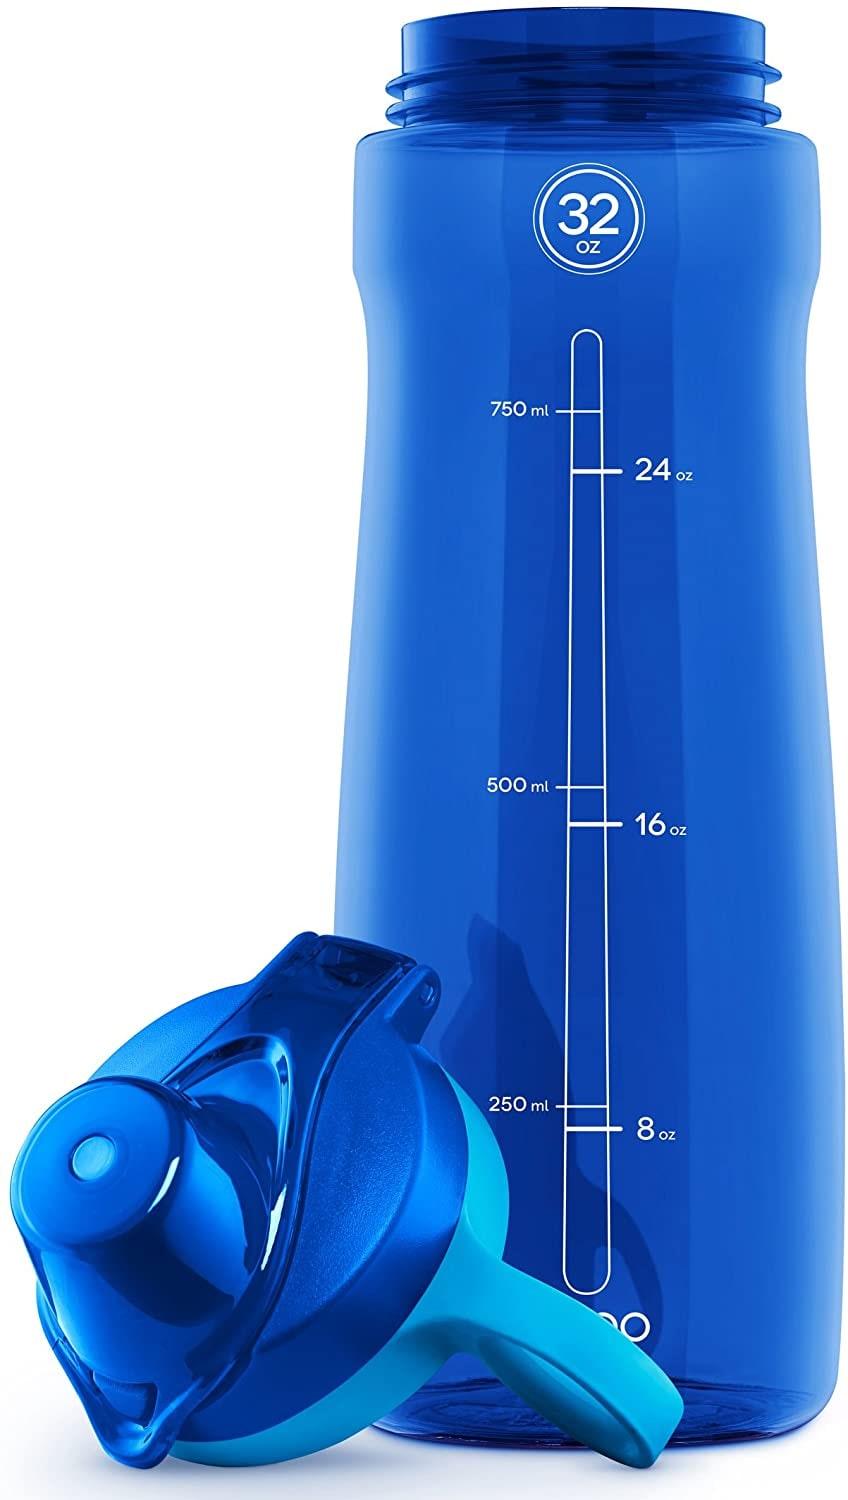 Pogo BPA-Free Plastic Water Bottle with Chug Lid - 32 oz.